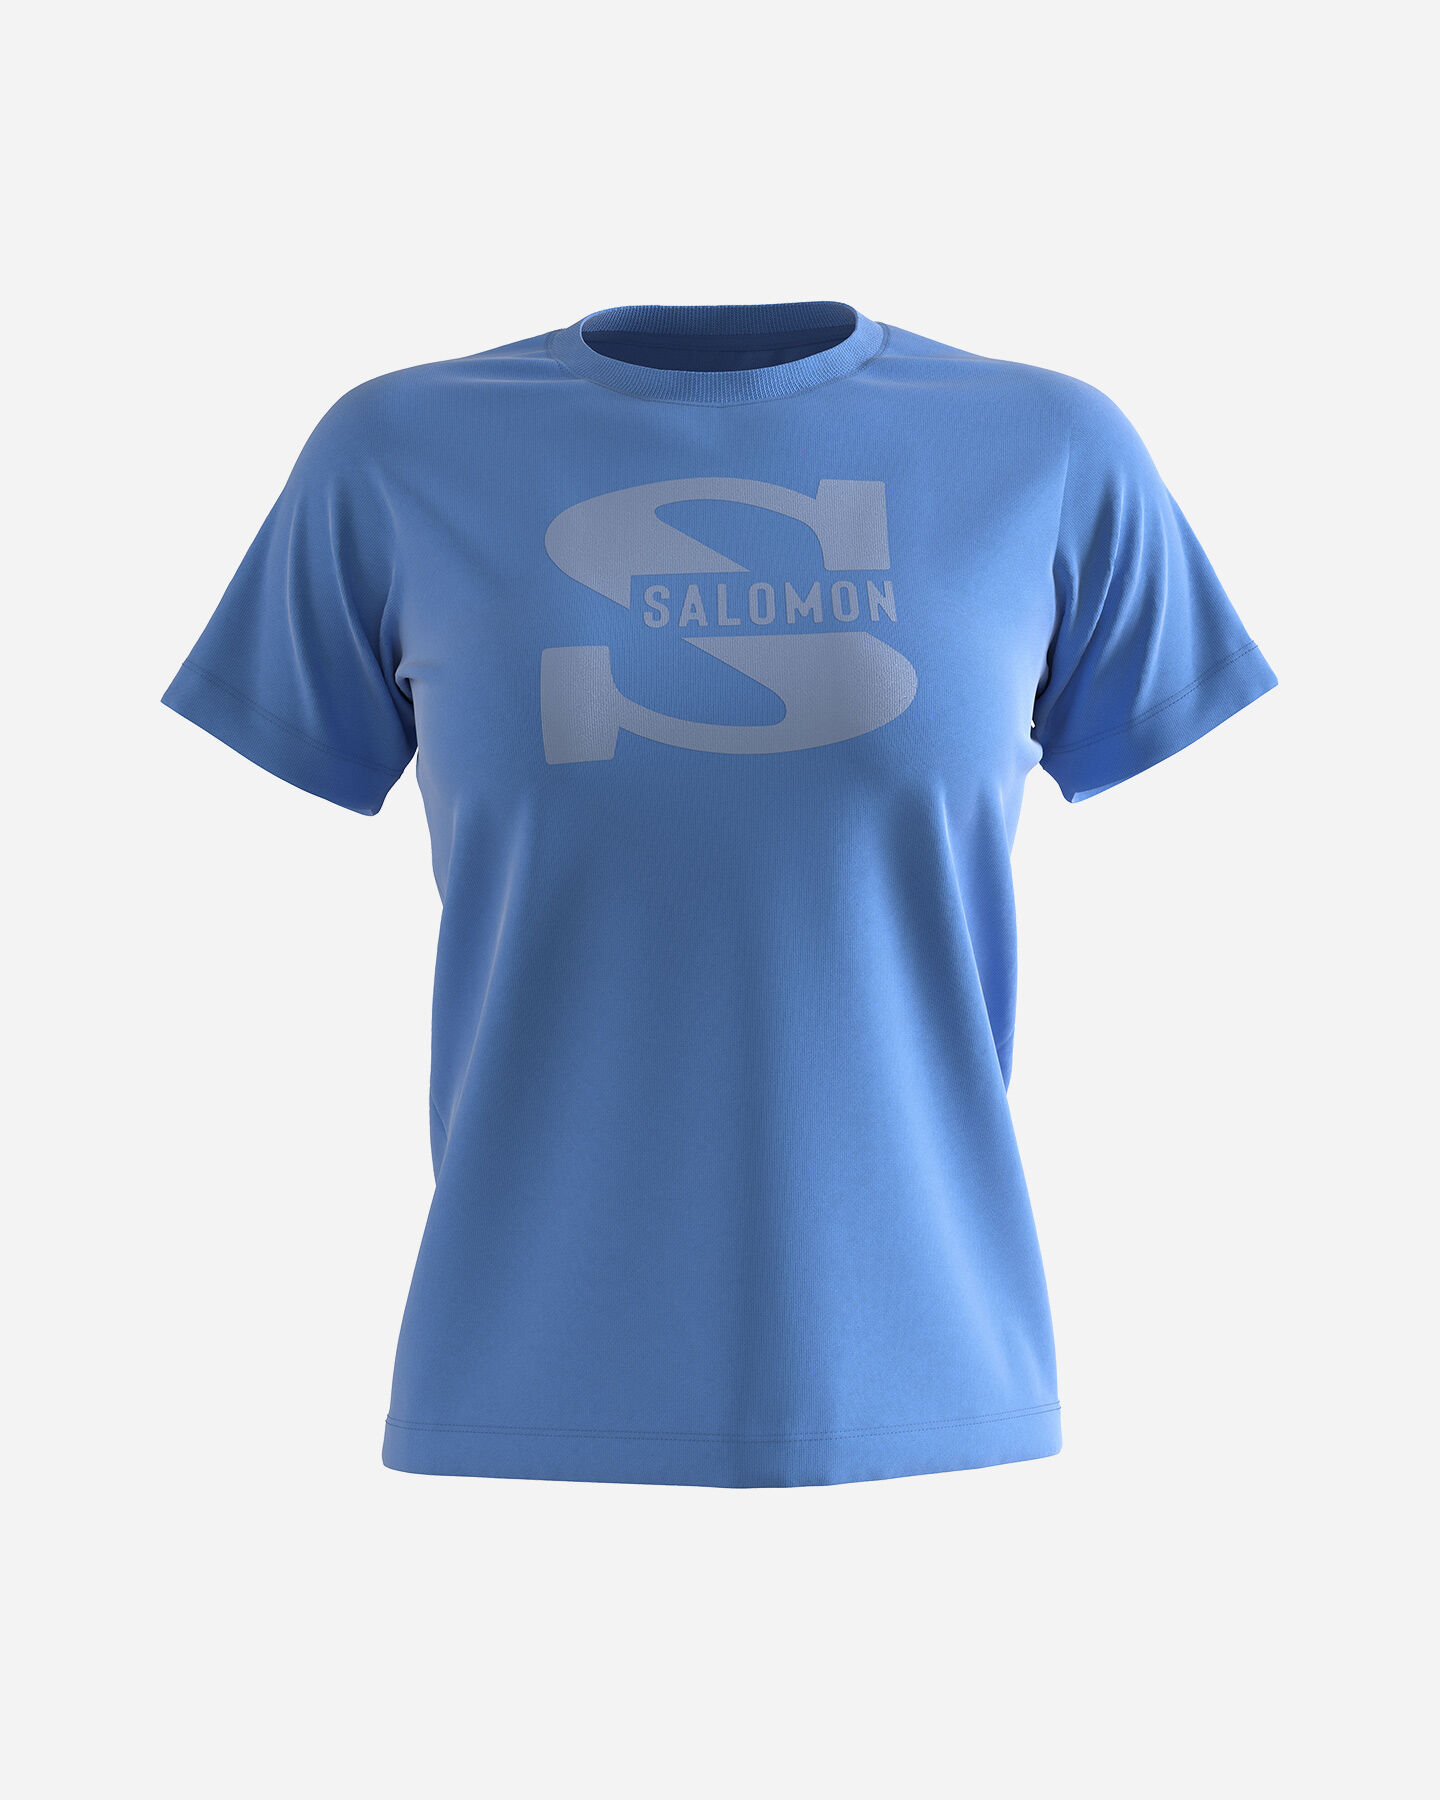  T-Shirt SALOMON OUTLIFE BIG LOGO W S5407802|UNI|L scatto 0